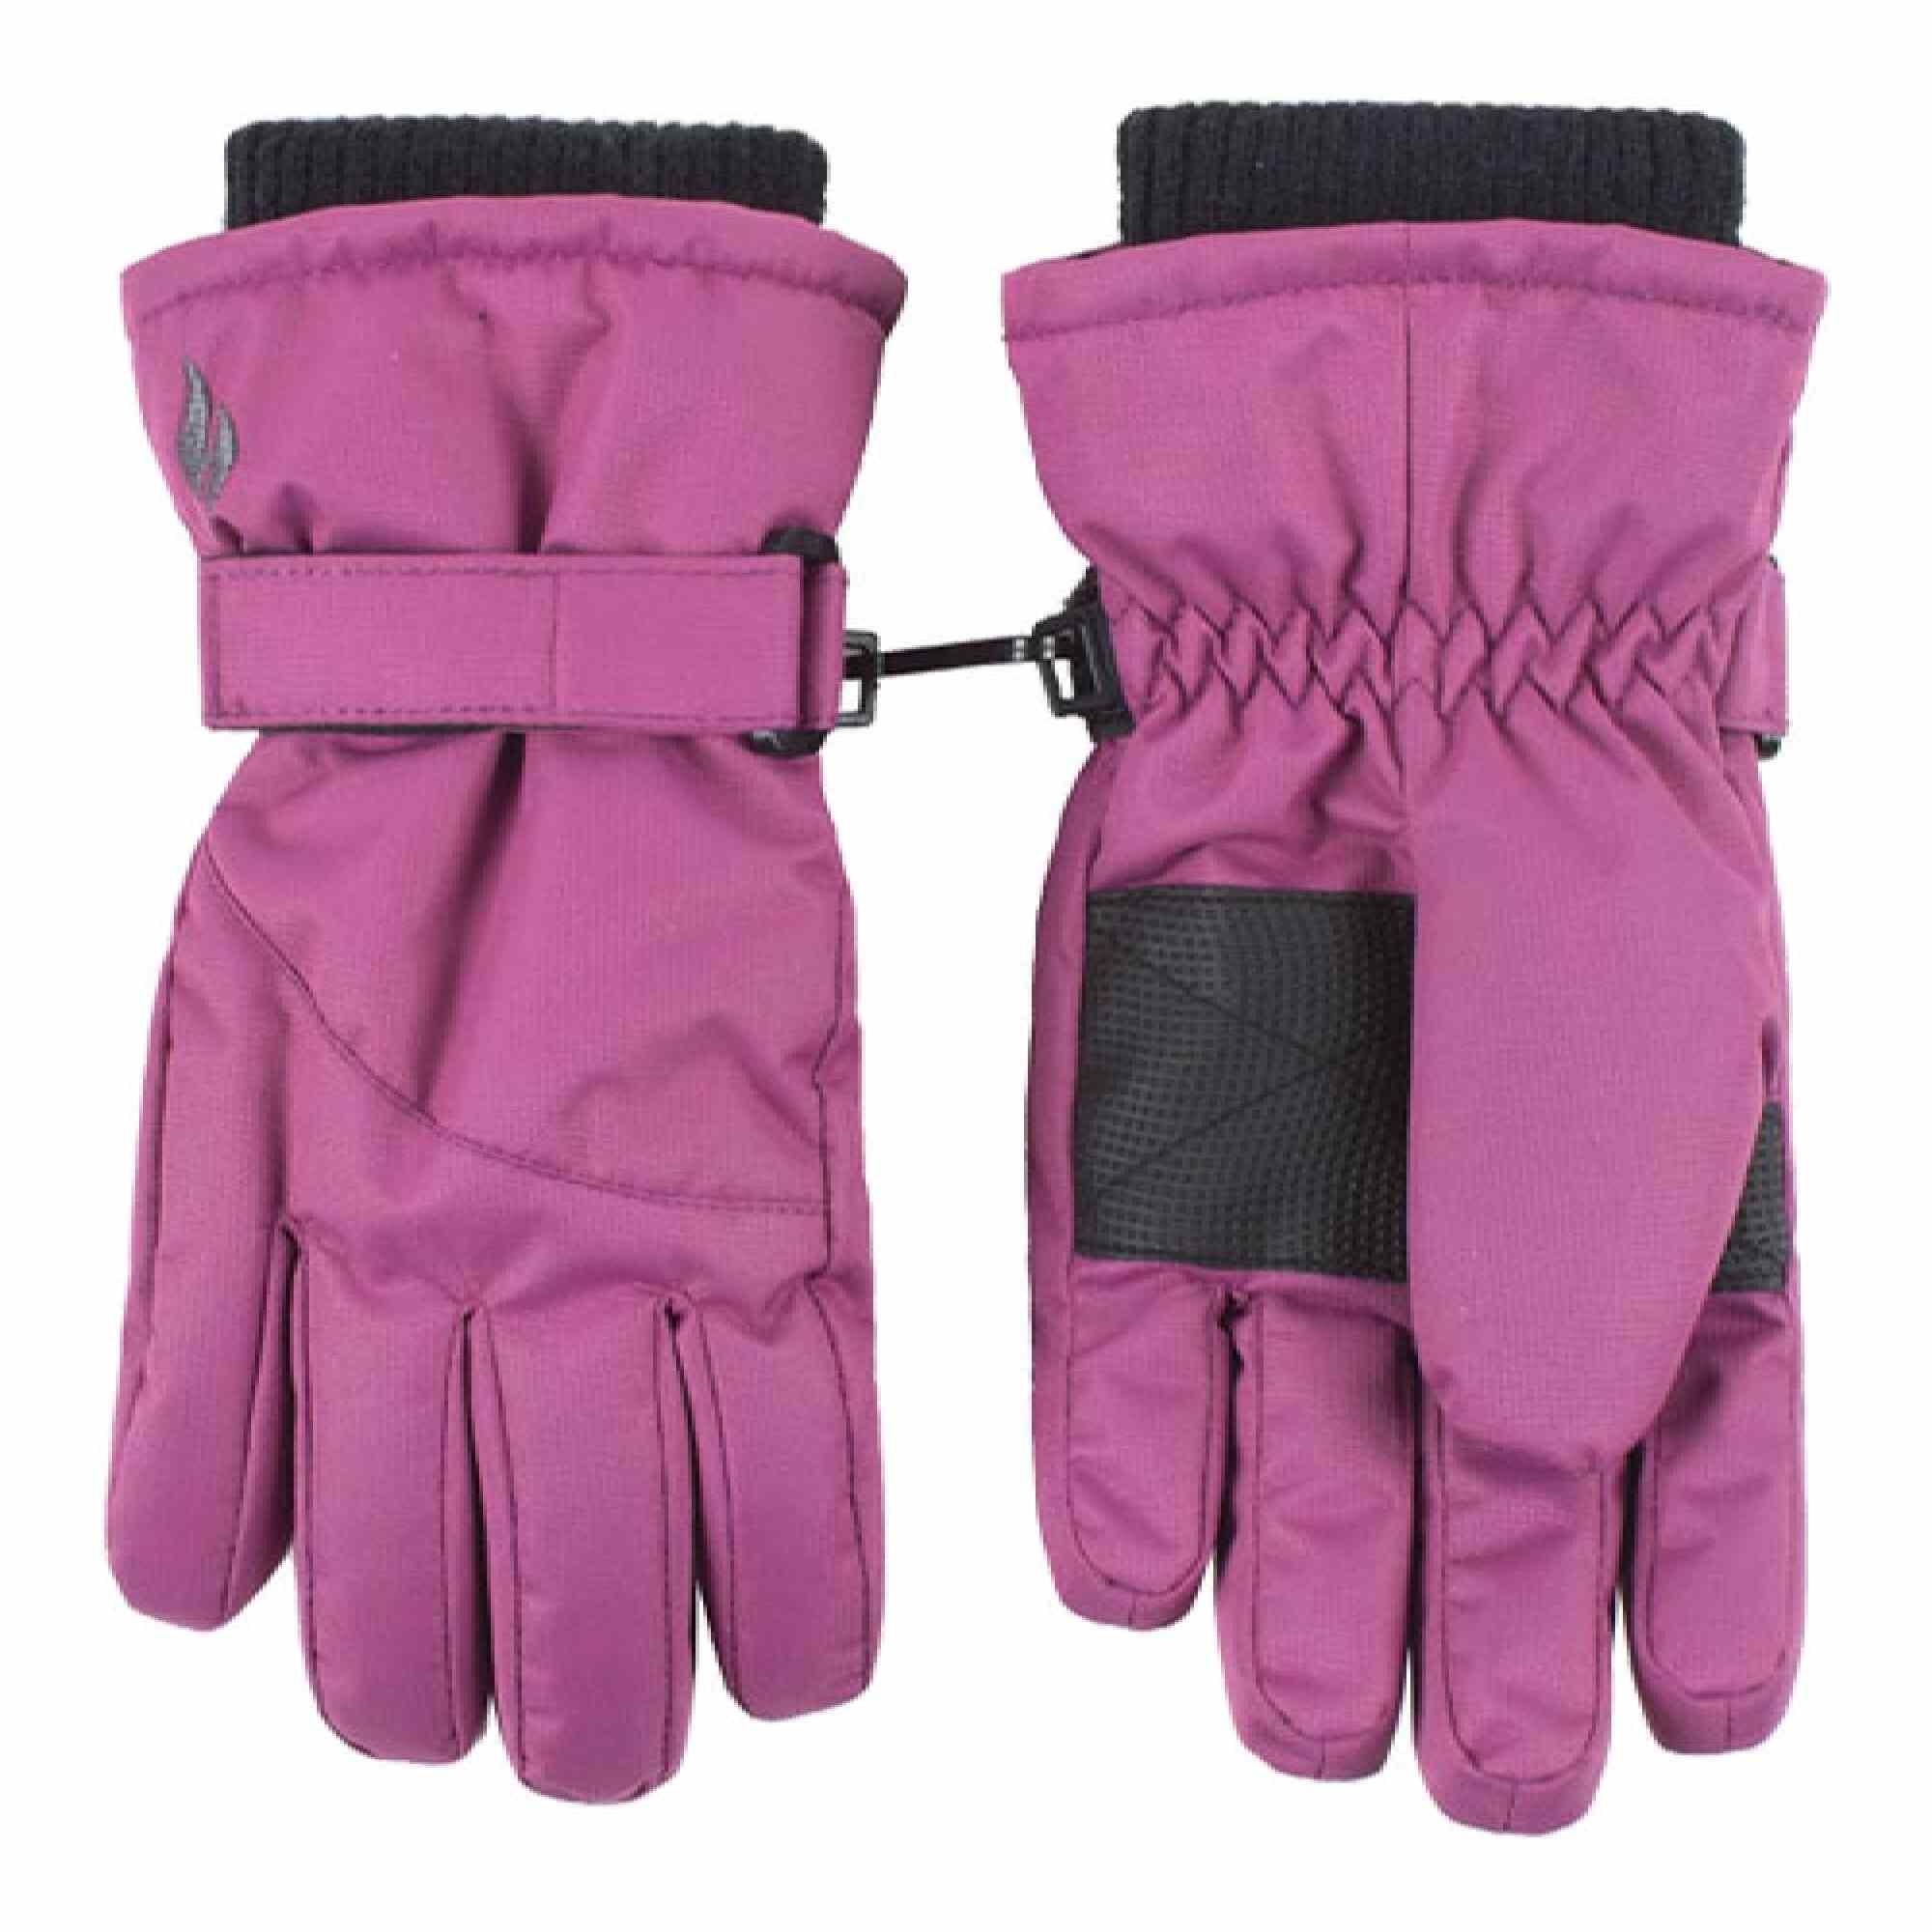 Childrens Pink Winter Fleece Lined Waterproof Thermal Snow Ski Gloves 1/3